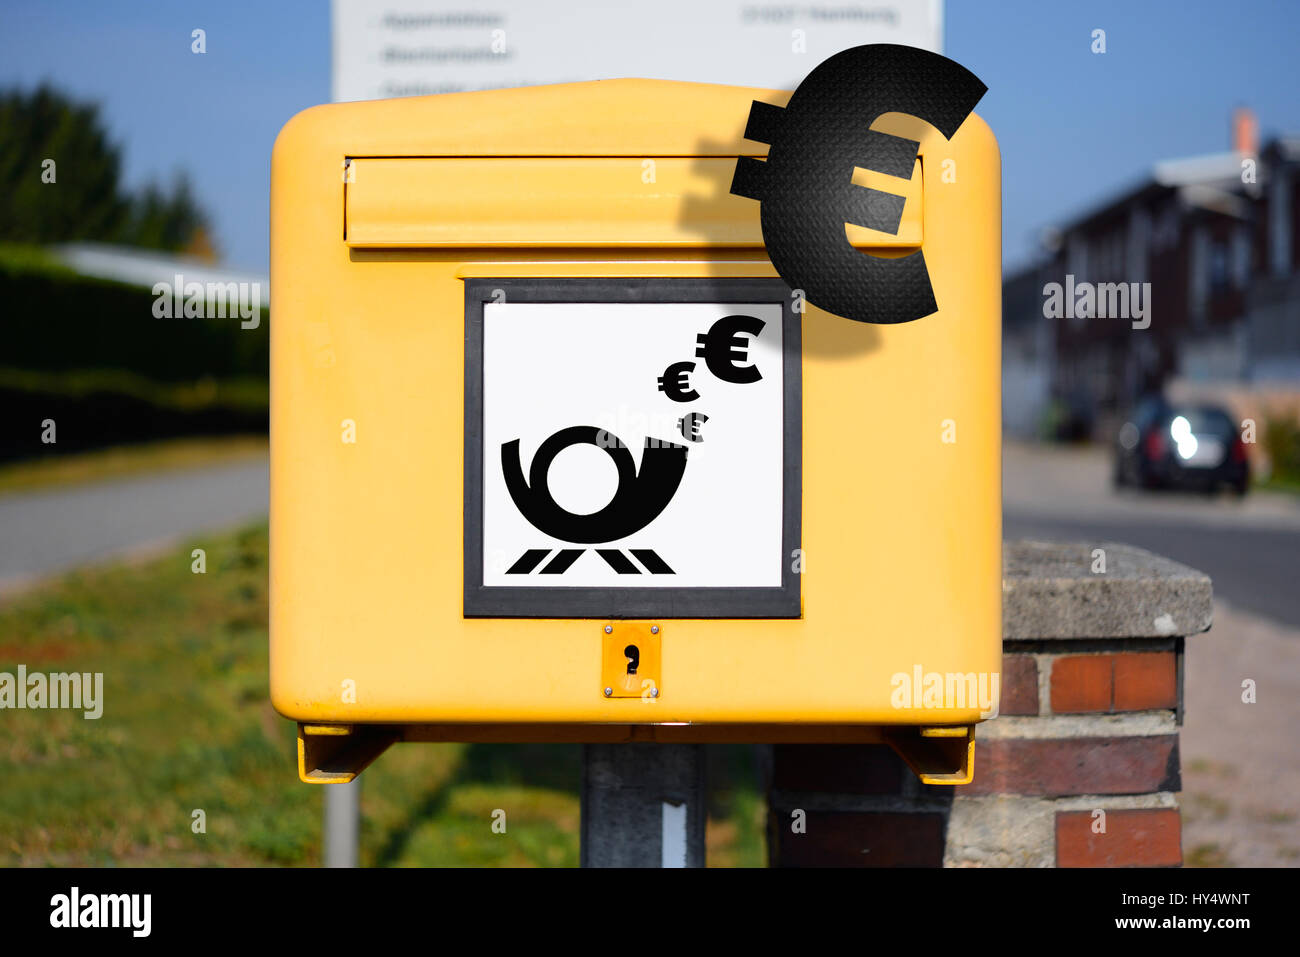 Buzón con foto Portoerhoehung eurosign, simbólico, mit, Symbolfoto Briefkasten Eurozeichen Portoerhoehung Foto de stock